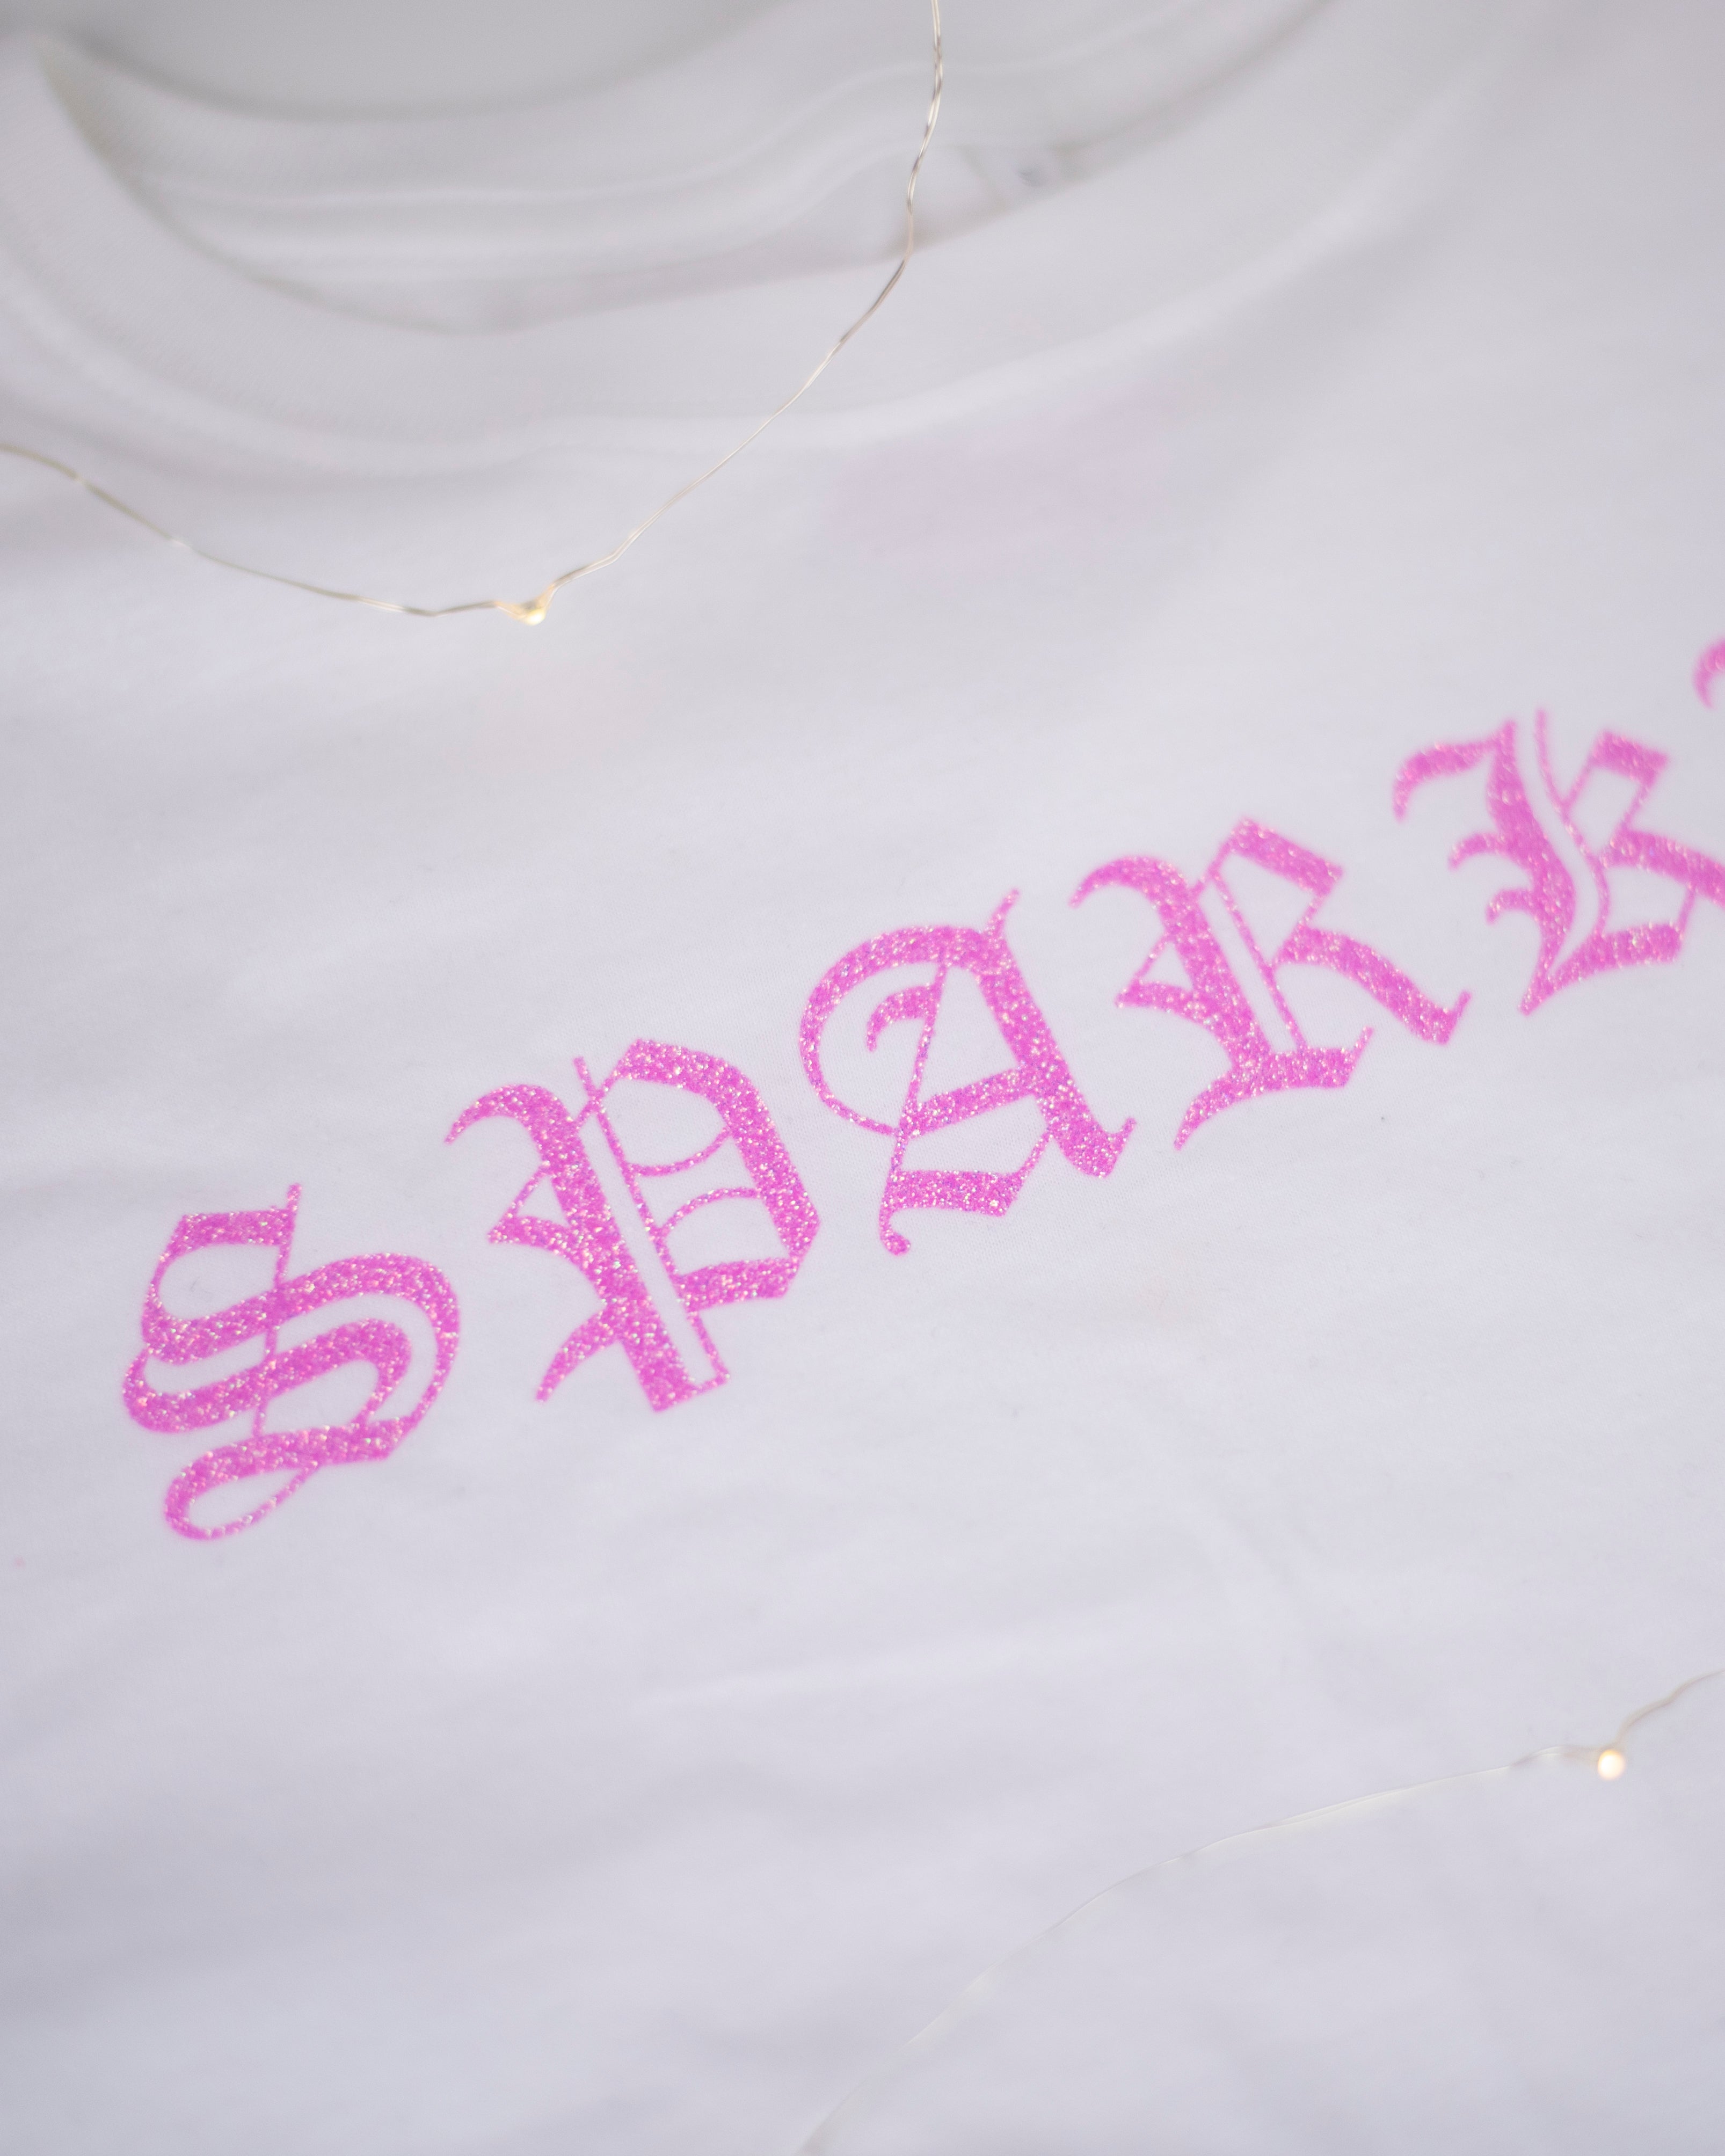 SPARKLE Shirt